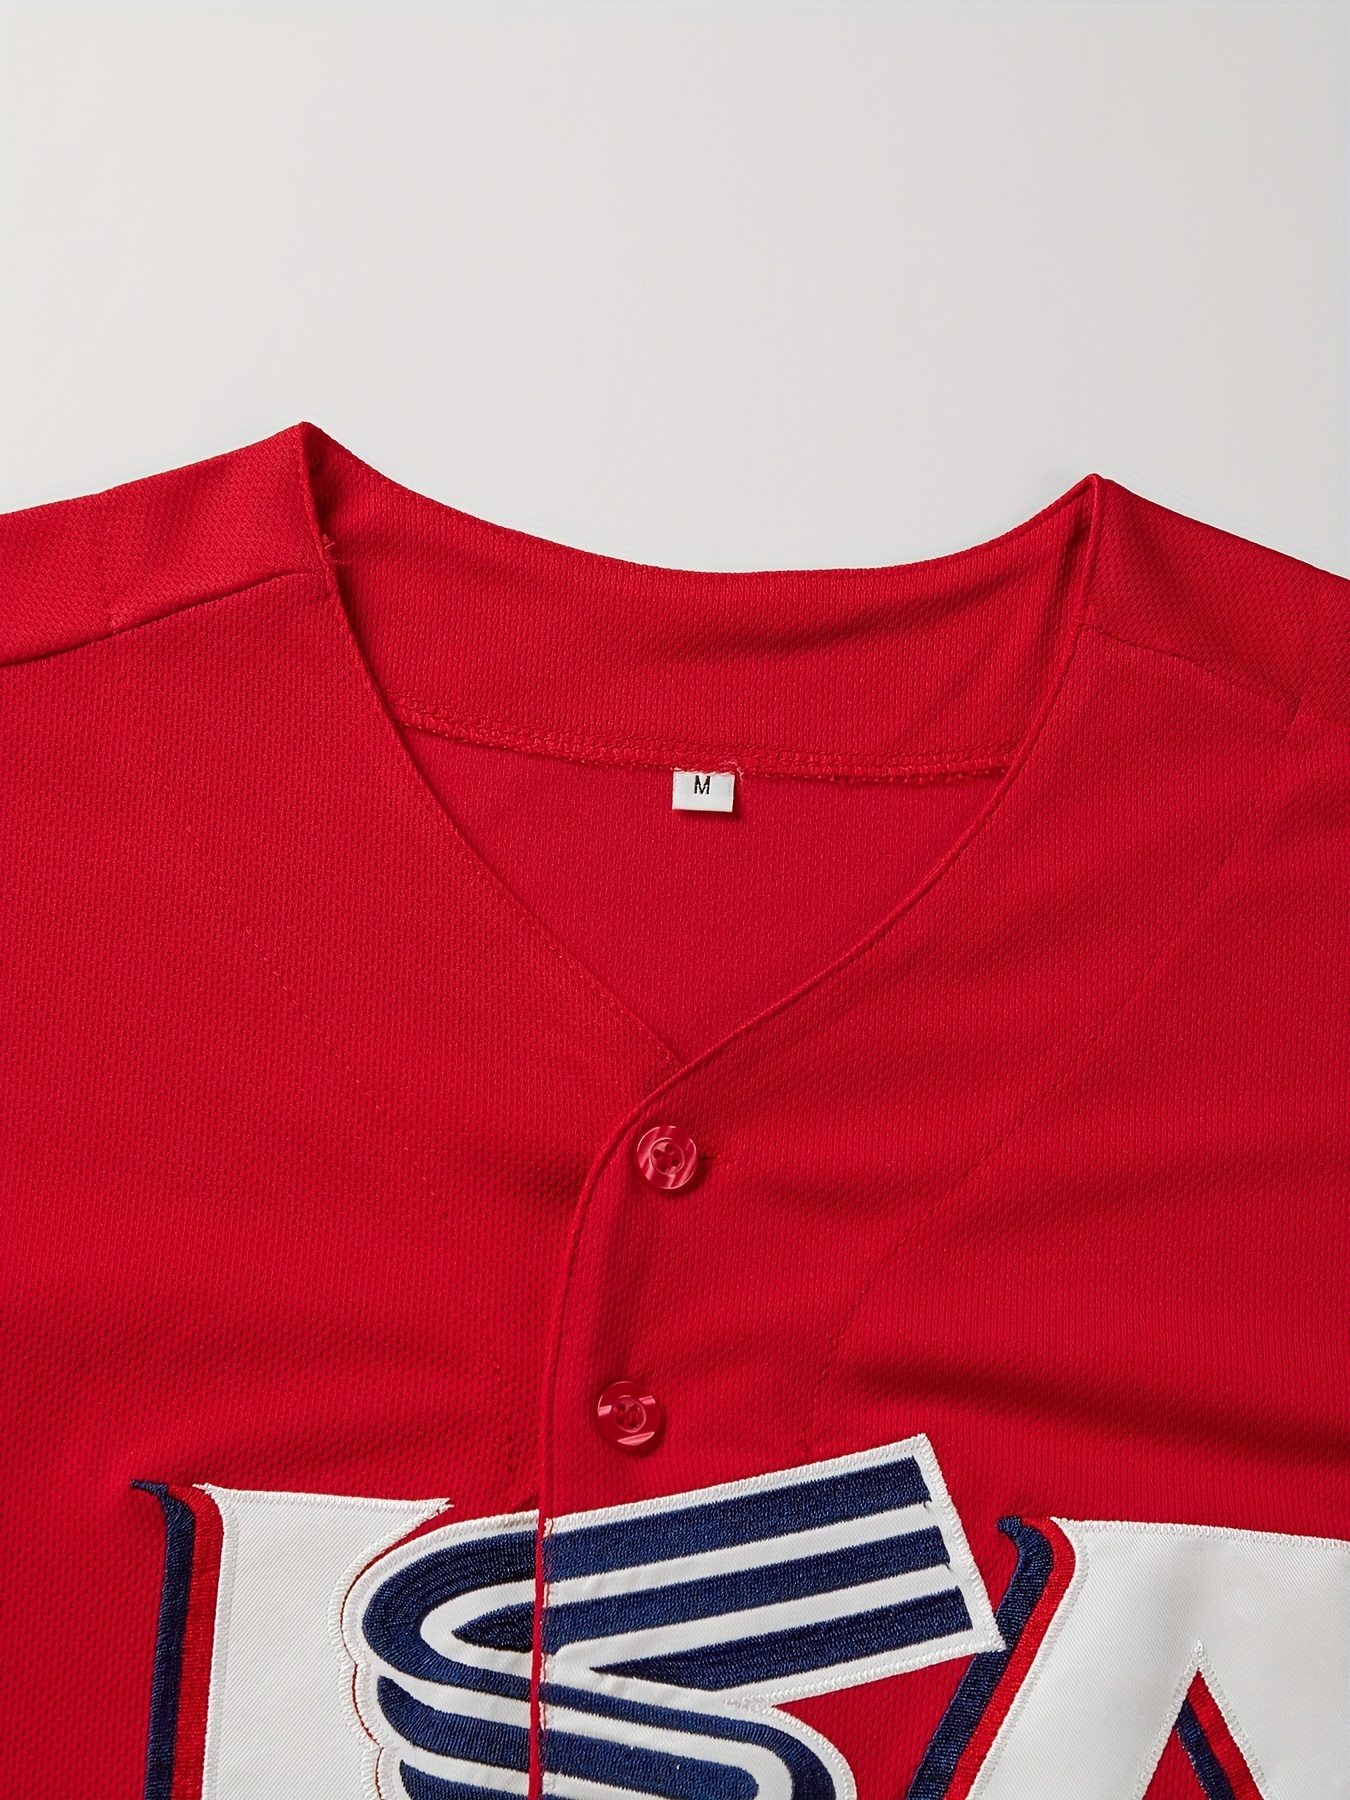 Men's Vintage Baseball Jersey, USA 27 #Baseball Sweatshirt Sportswear for Party Costume Gift,Breathable, Quick Dry,Temu